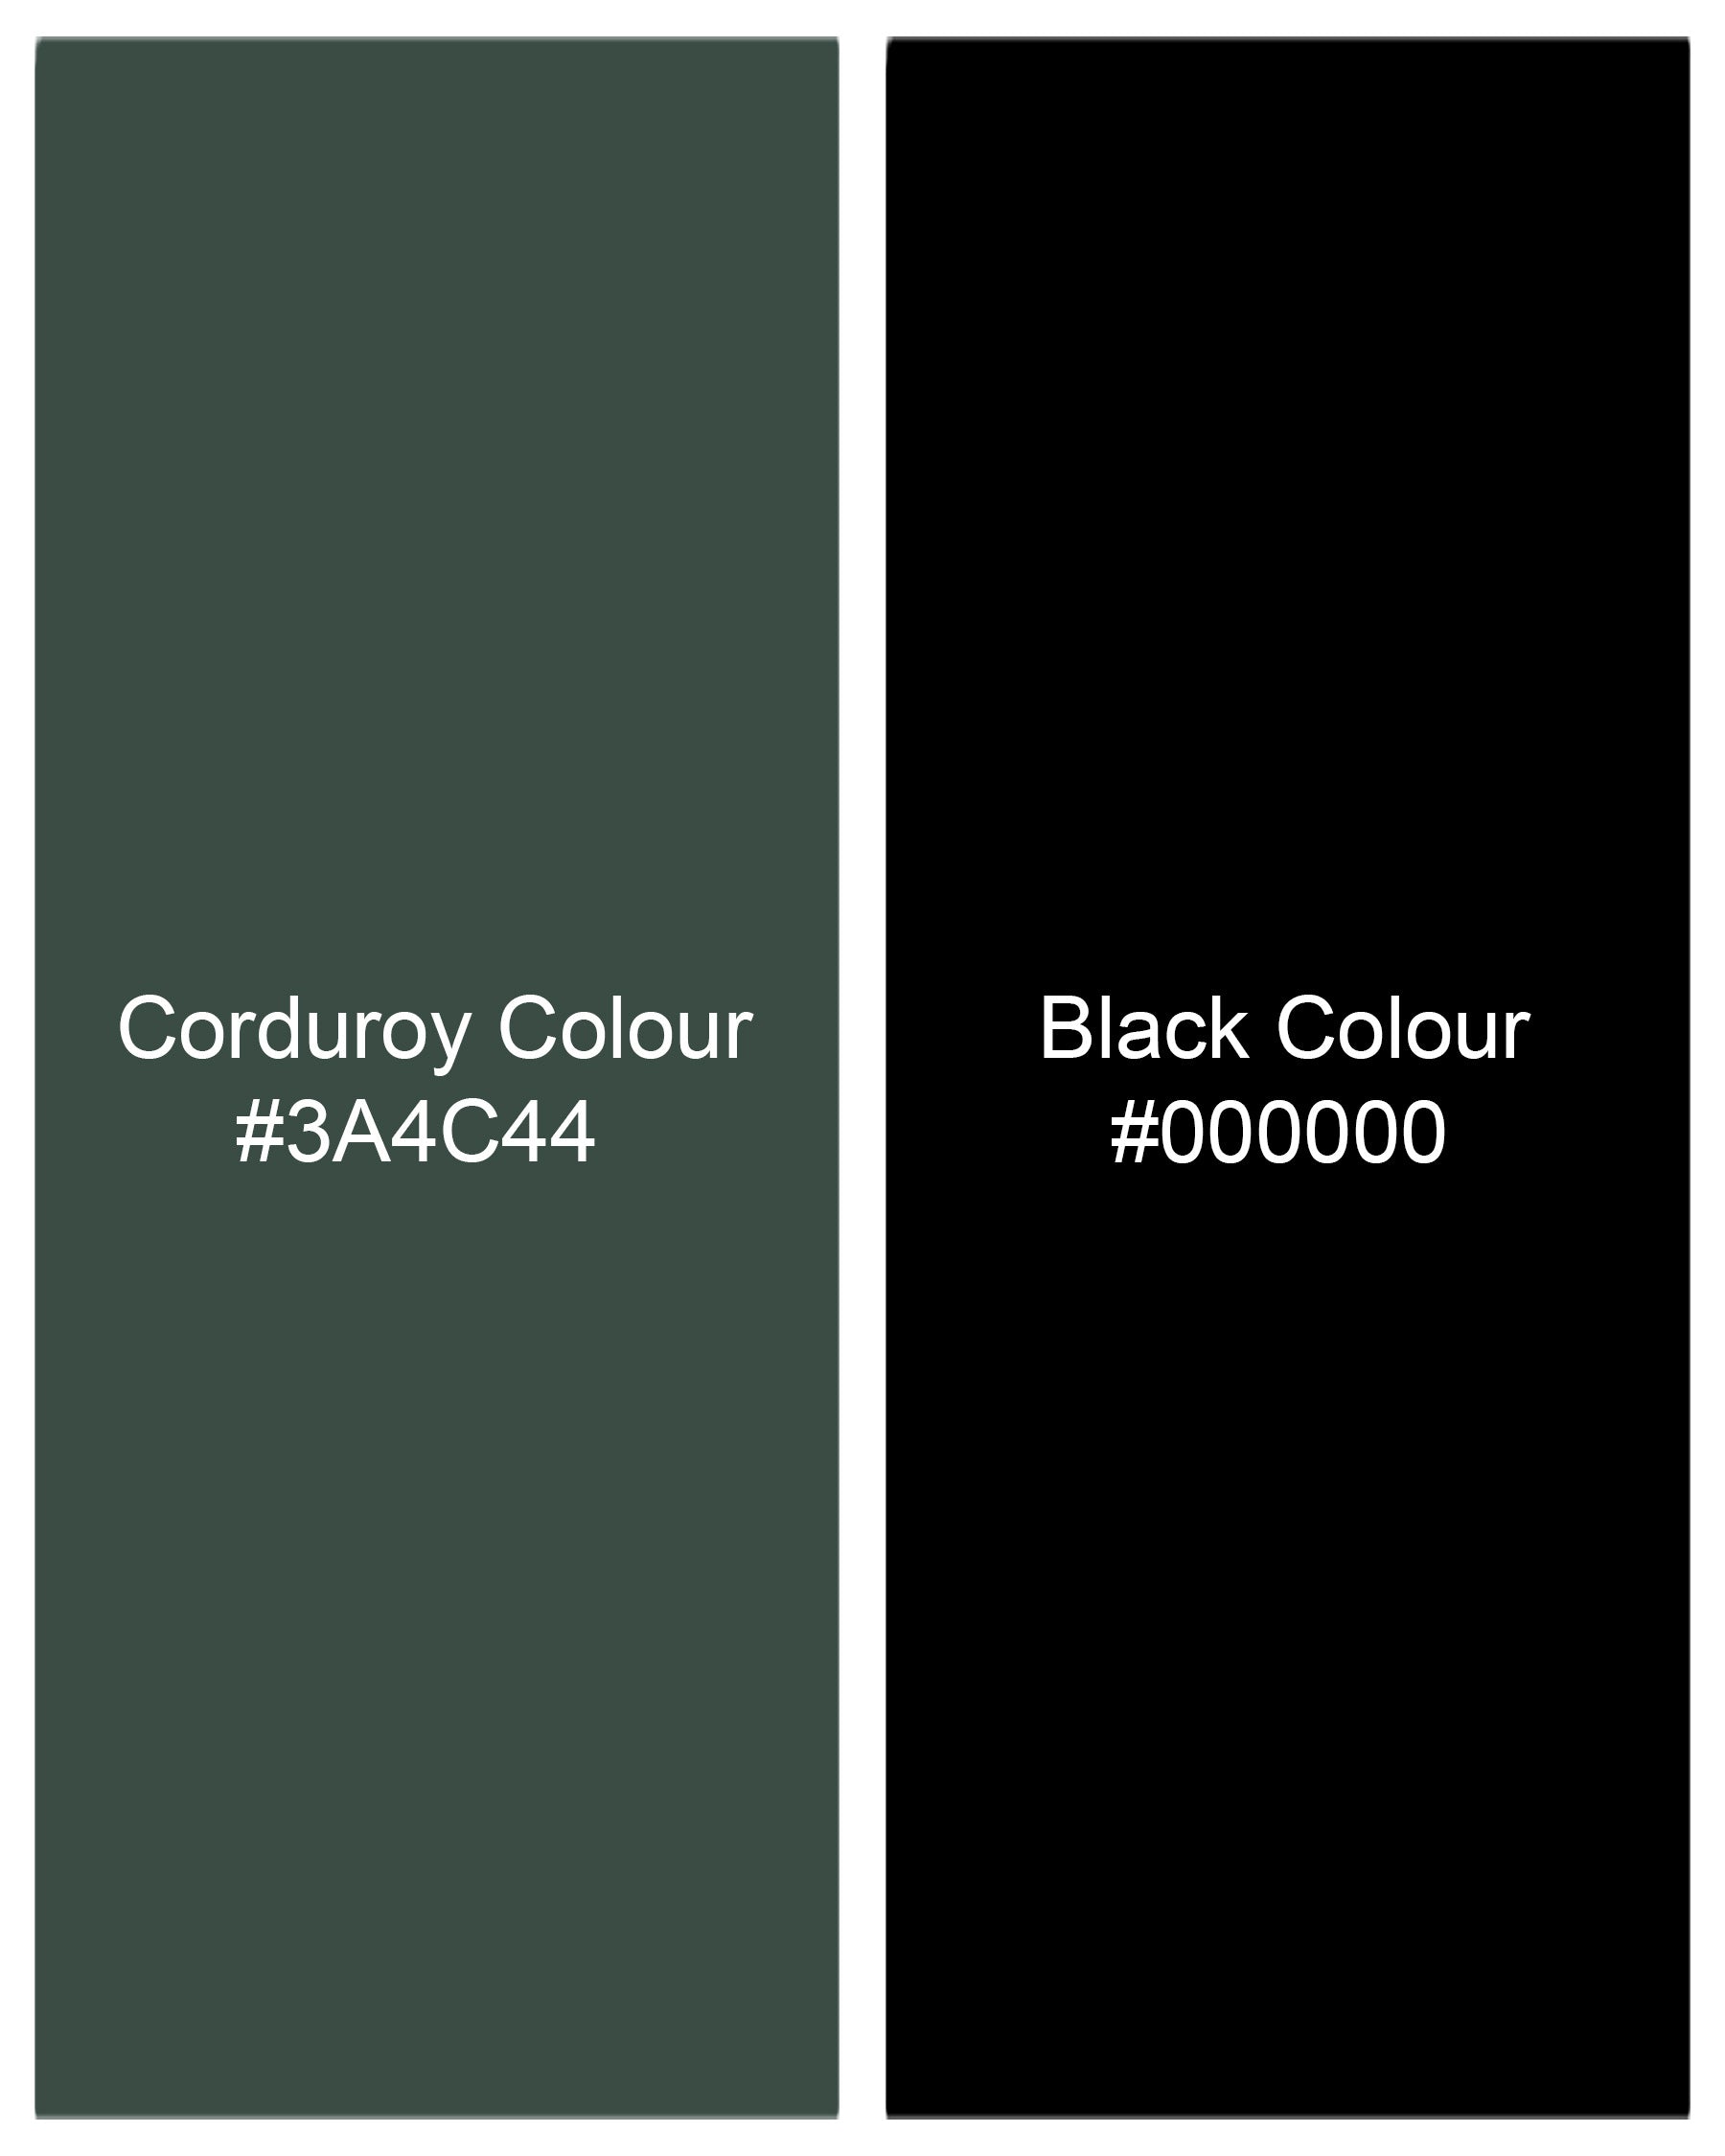 Corduroy Green With Jade Black 3D Plaid Dobby Textured Giza Cotton Designer Shirt 8011-CA-P102-38, 8011-CA-P102-H-38, 8011-CA-P102-39, 8011-CA-P102-H-39, 8011-CA-P102-40, 8011-CA-P102-H-40, 8011-CA-P102-42, 8011-CA-P102-H-42, 8011-CA-P102-44, 8011-CA-P102-H-44, 8011-CA-P102-46, 8011-CA-P102-H-46, 8011-CA-P102-48, 8011-CA-P102-H-48, 8011-CA-P102-50, 8011-CA-P102-H-50, 8011-CA-P102-52, 8011-CA-P102-H-52